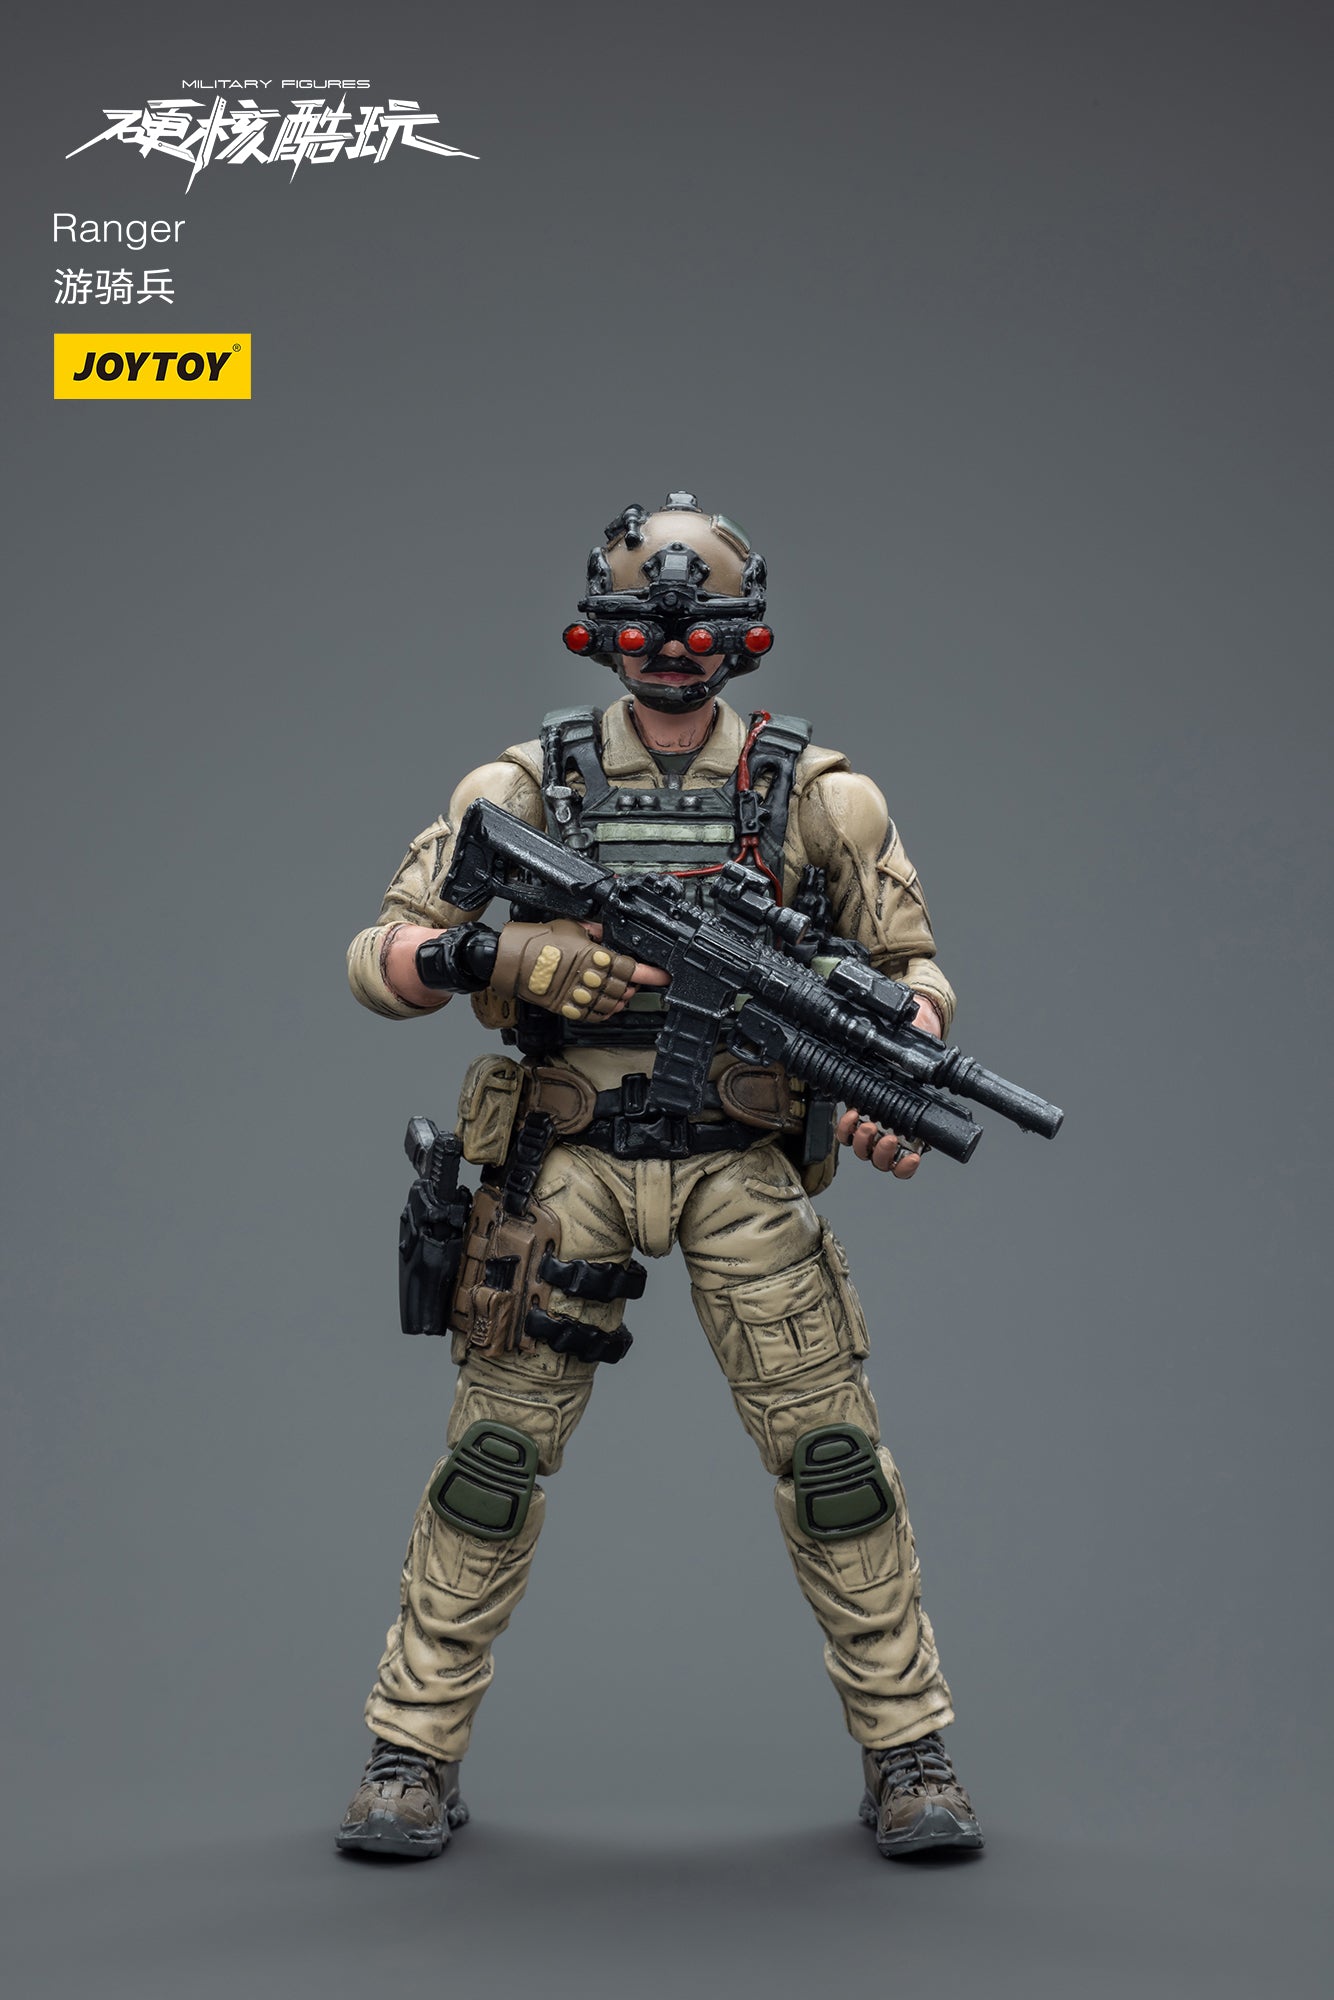 Ranger - Military Action Figure By JOYTOY